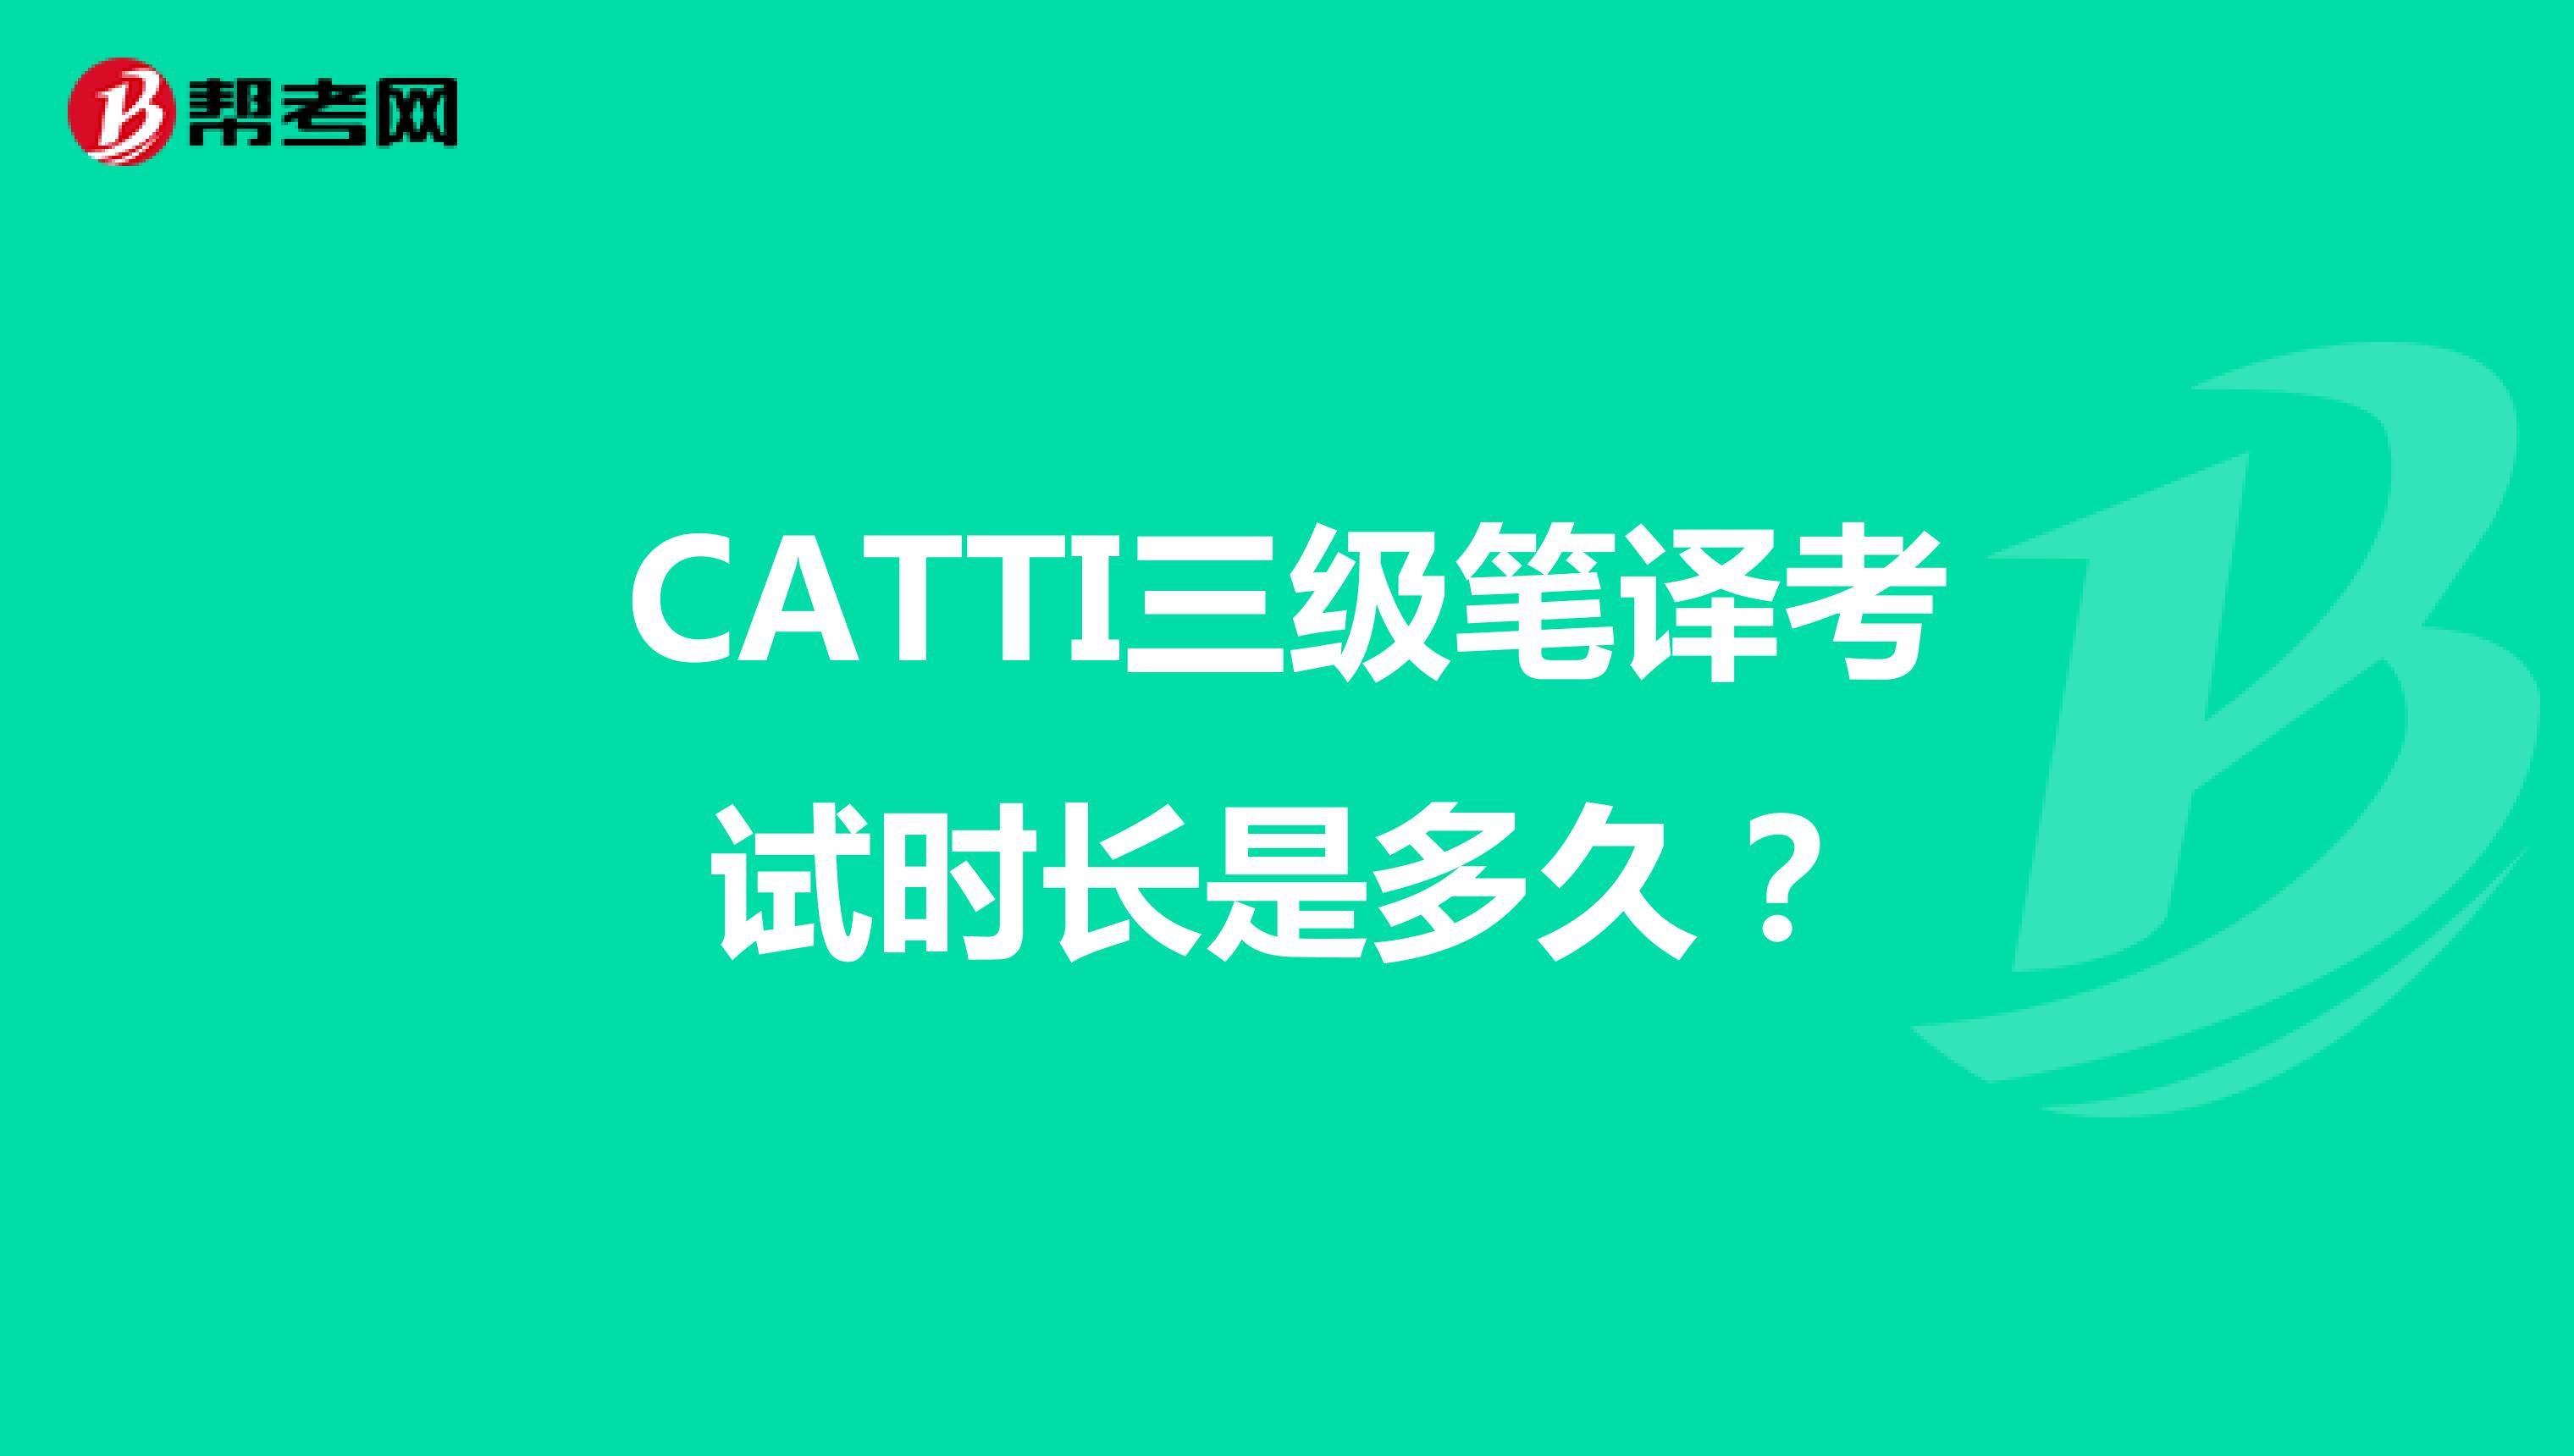 CATTI三级笔译考试时长是多久？